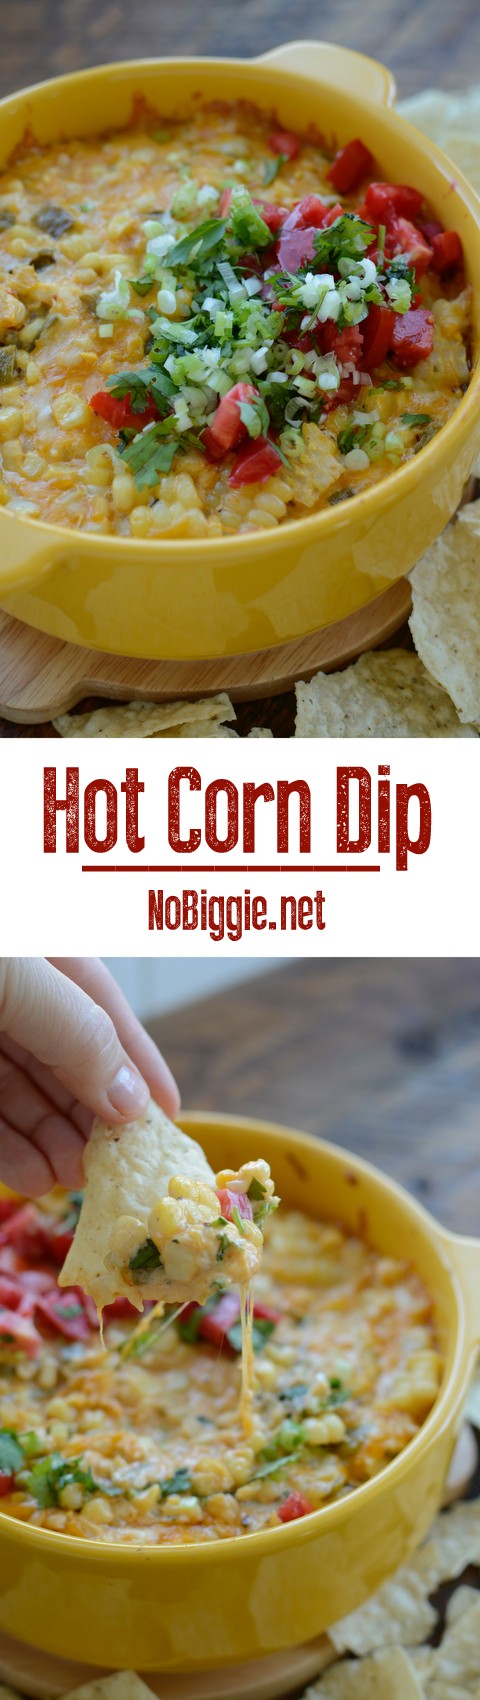 http://www.nobiggie.net/wp-content/uploads/2016/09/Hot-Corn-Dip.jpg